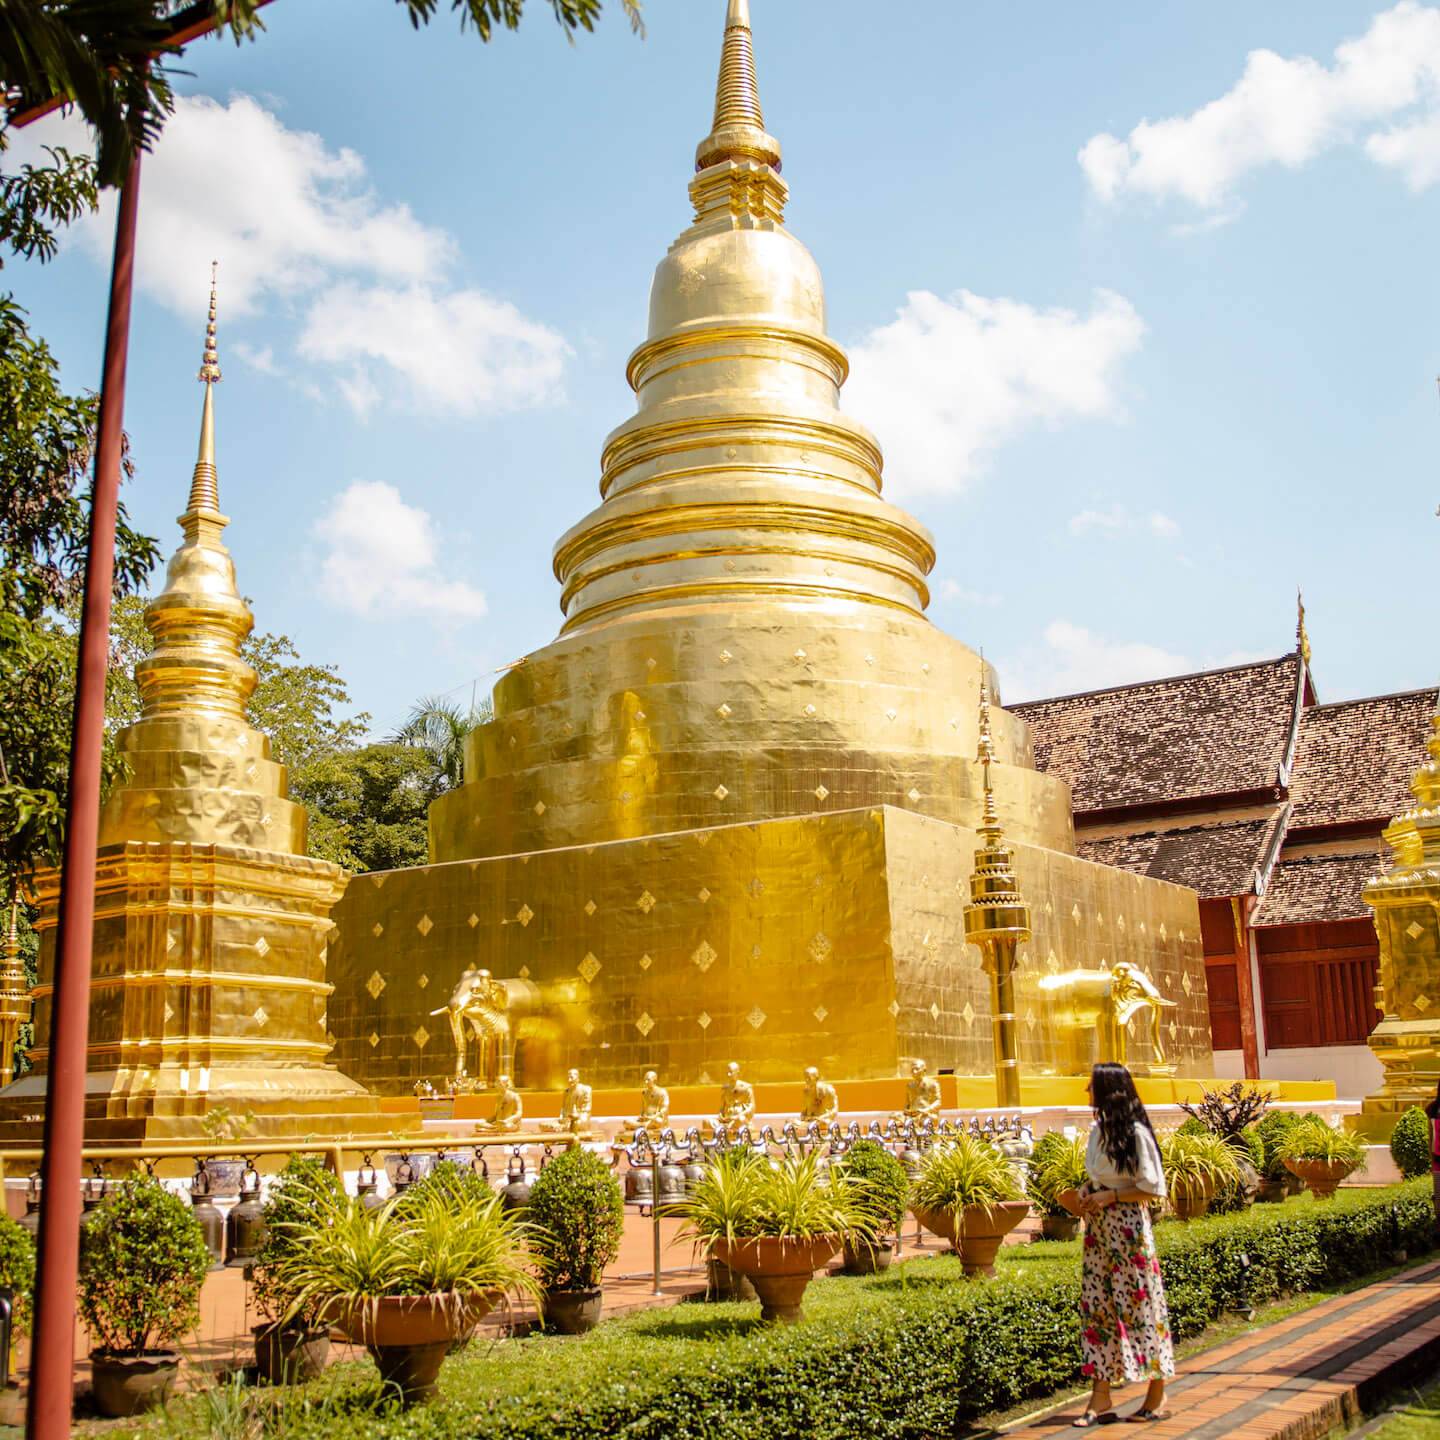 Wat phra singh 3 days in Chiang Mai